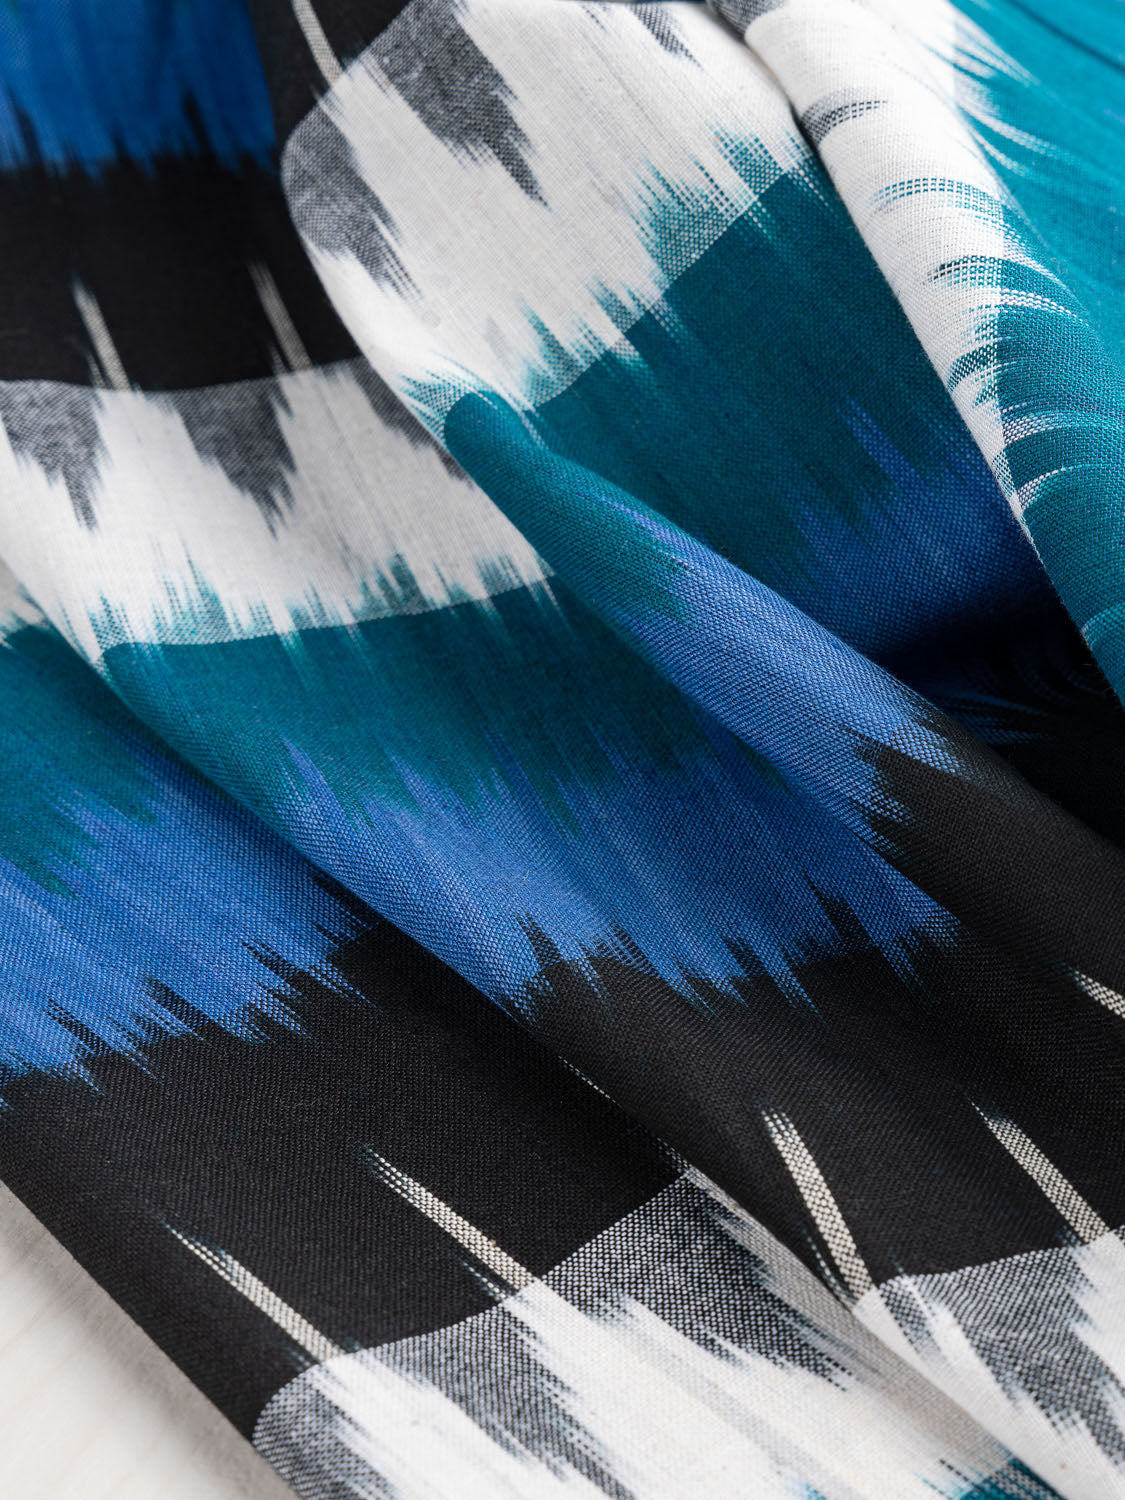 Handwoven Cotton Striped Ikat - Blue + Teal + Cream | Core Fabrics